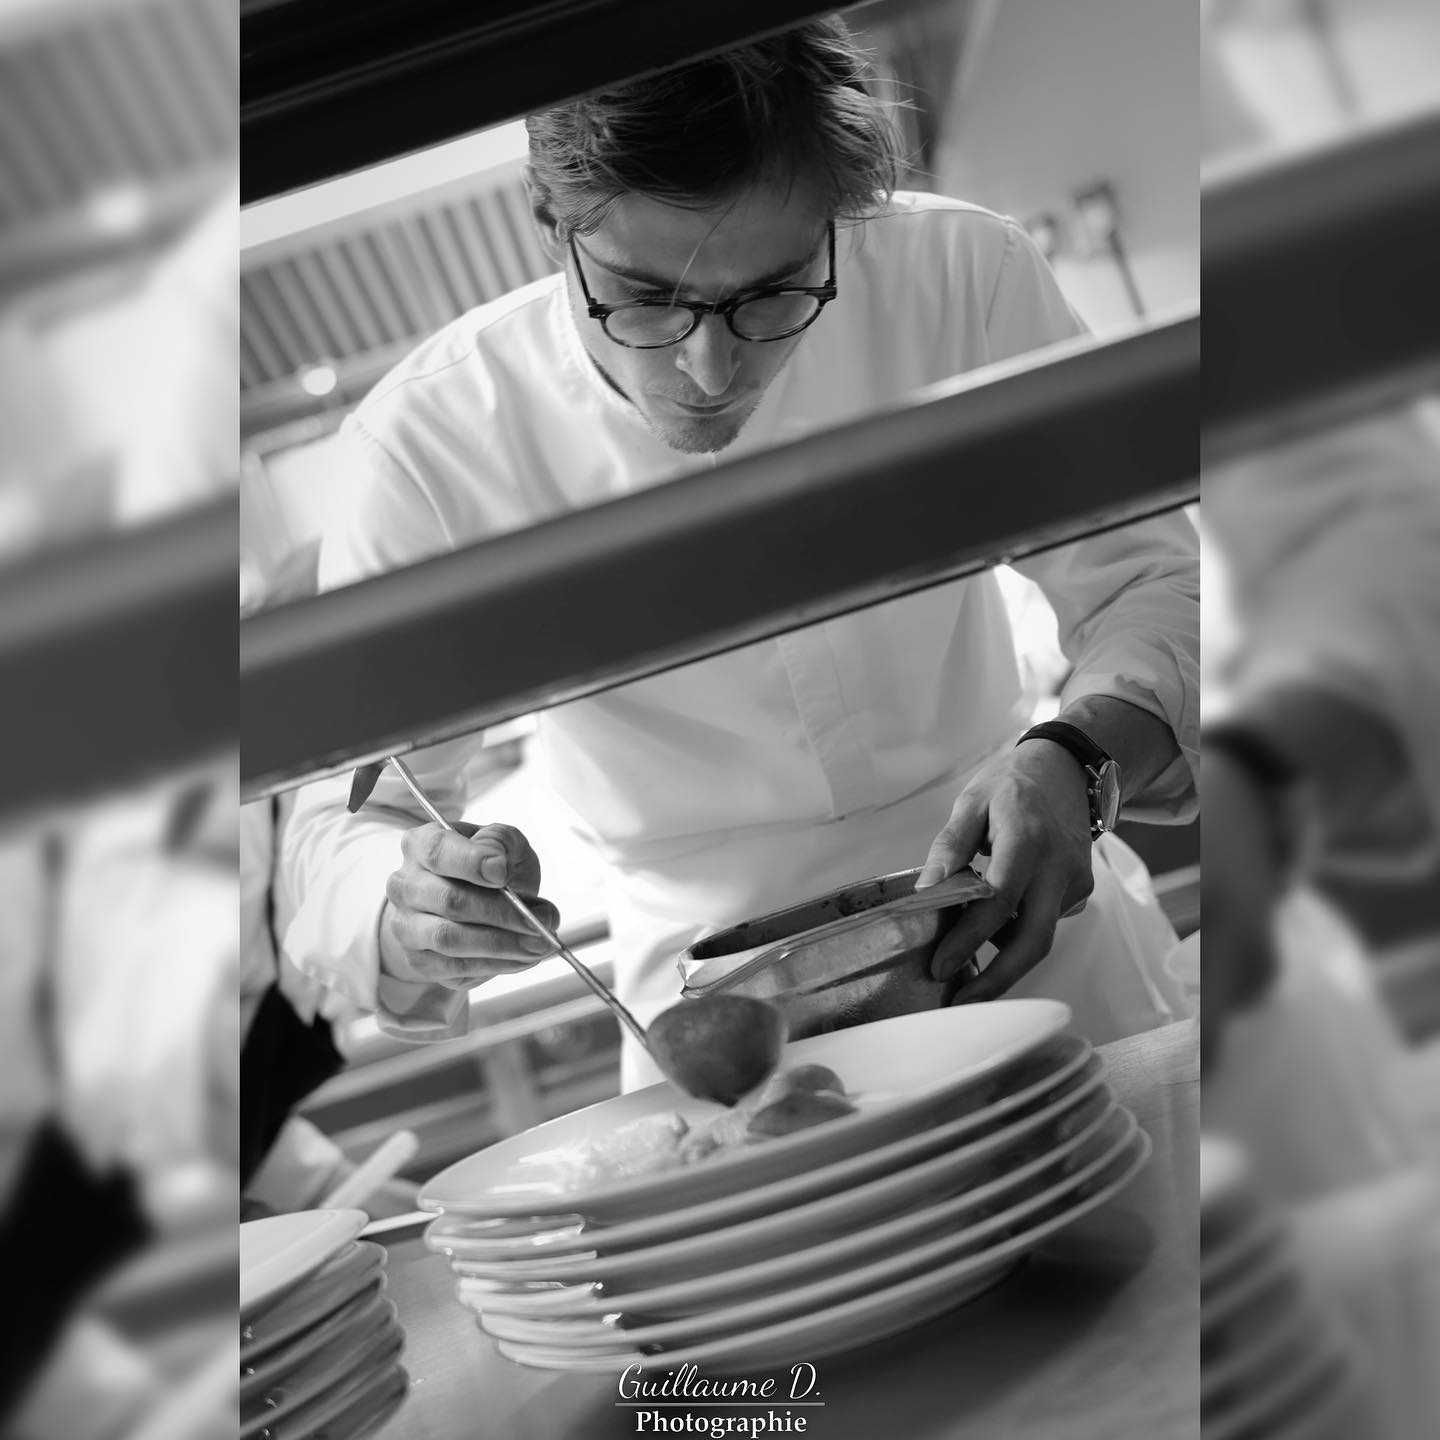 @epmt_paris
@cfamederic
@ferrandiparis
@croqlespoir 
-
#cuisine #cuisinier #cuisiniere #cuisto #cuisinefrançaise #france #pullman #association #gastronomie #gasto #gastronomiefrancaise